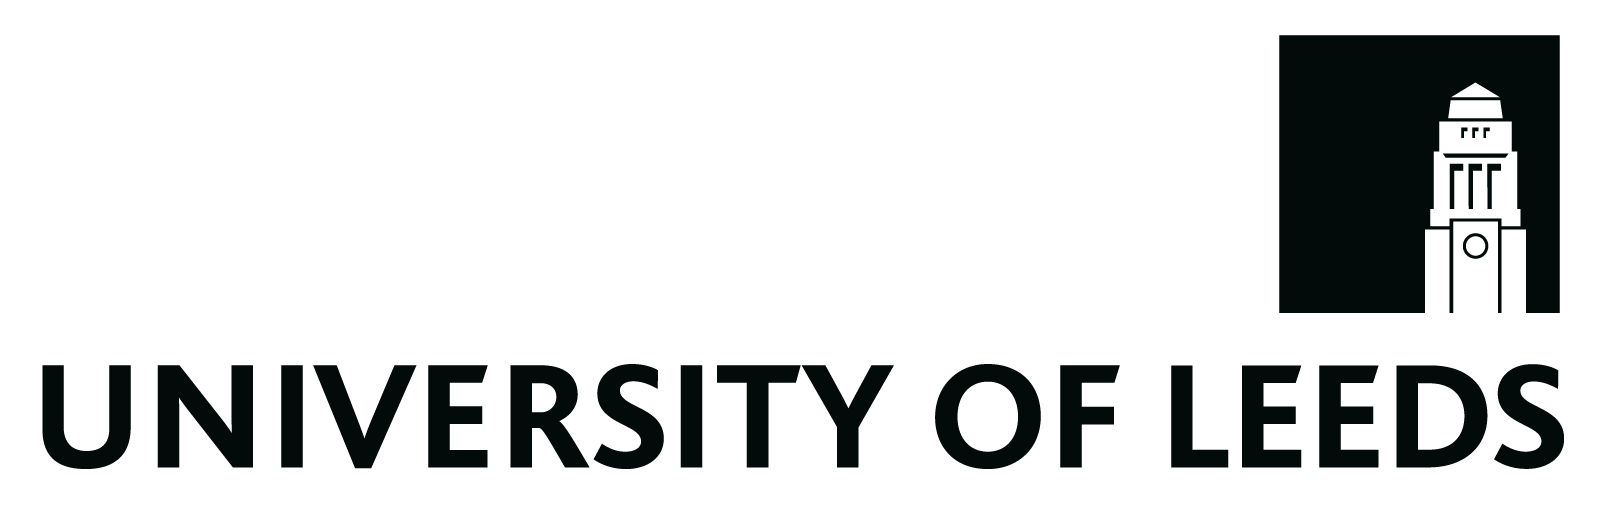 Leeds university logo. Customers of Turf Tank